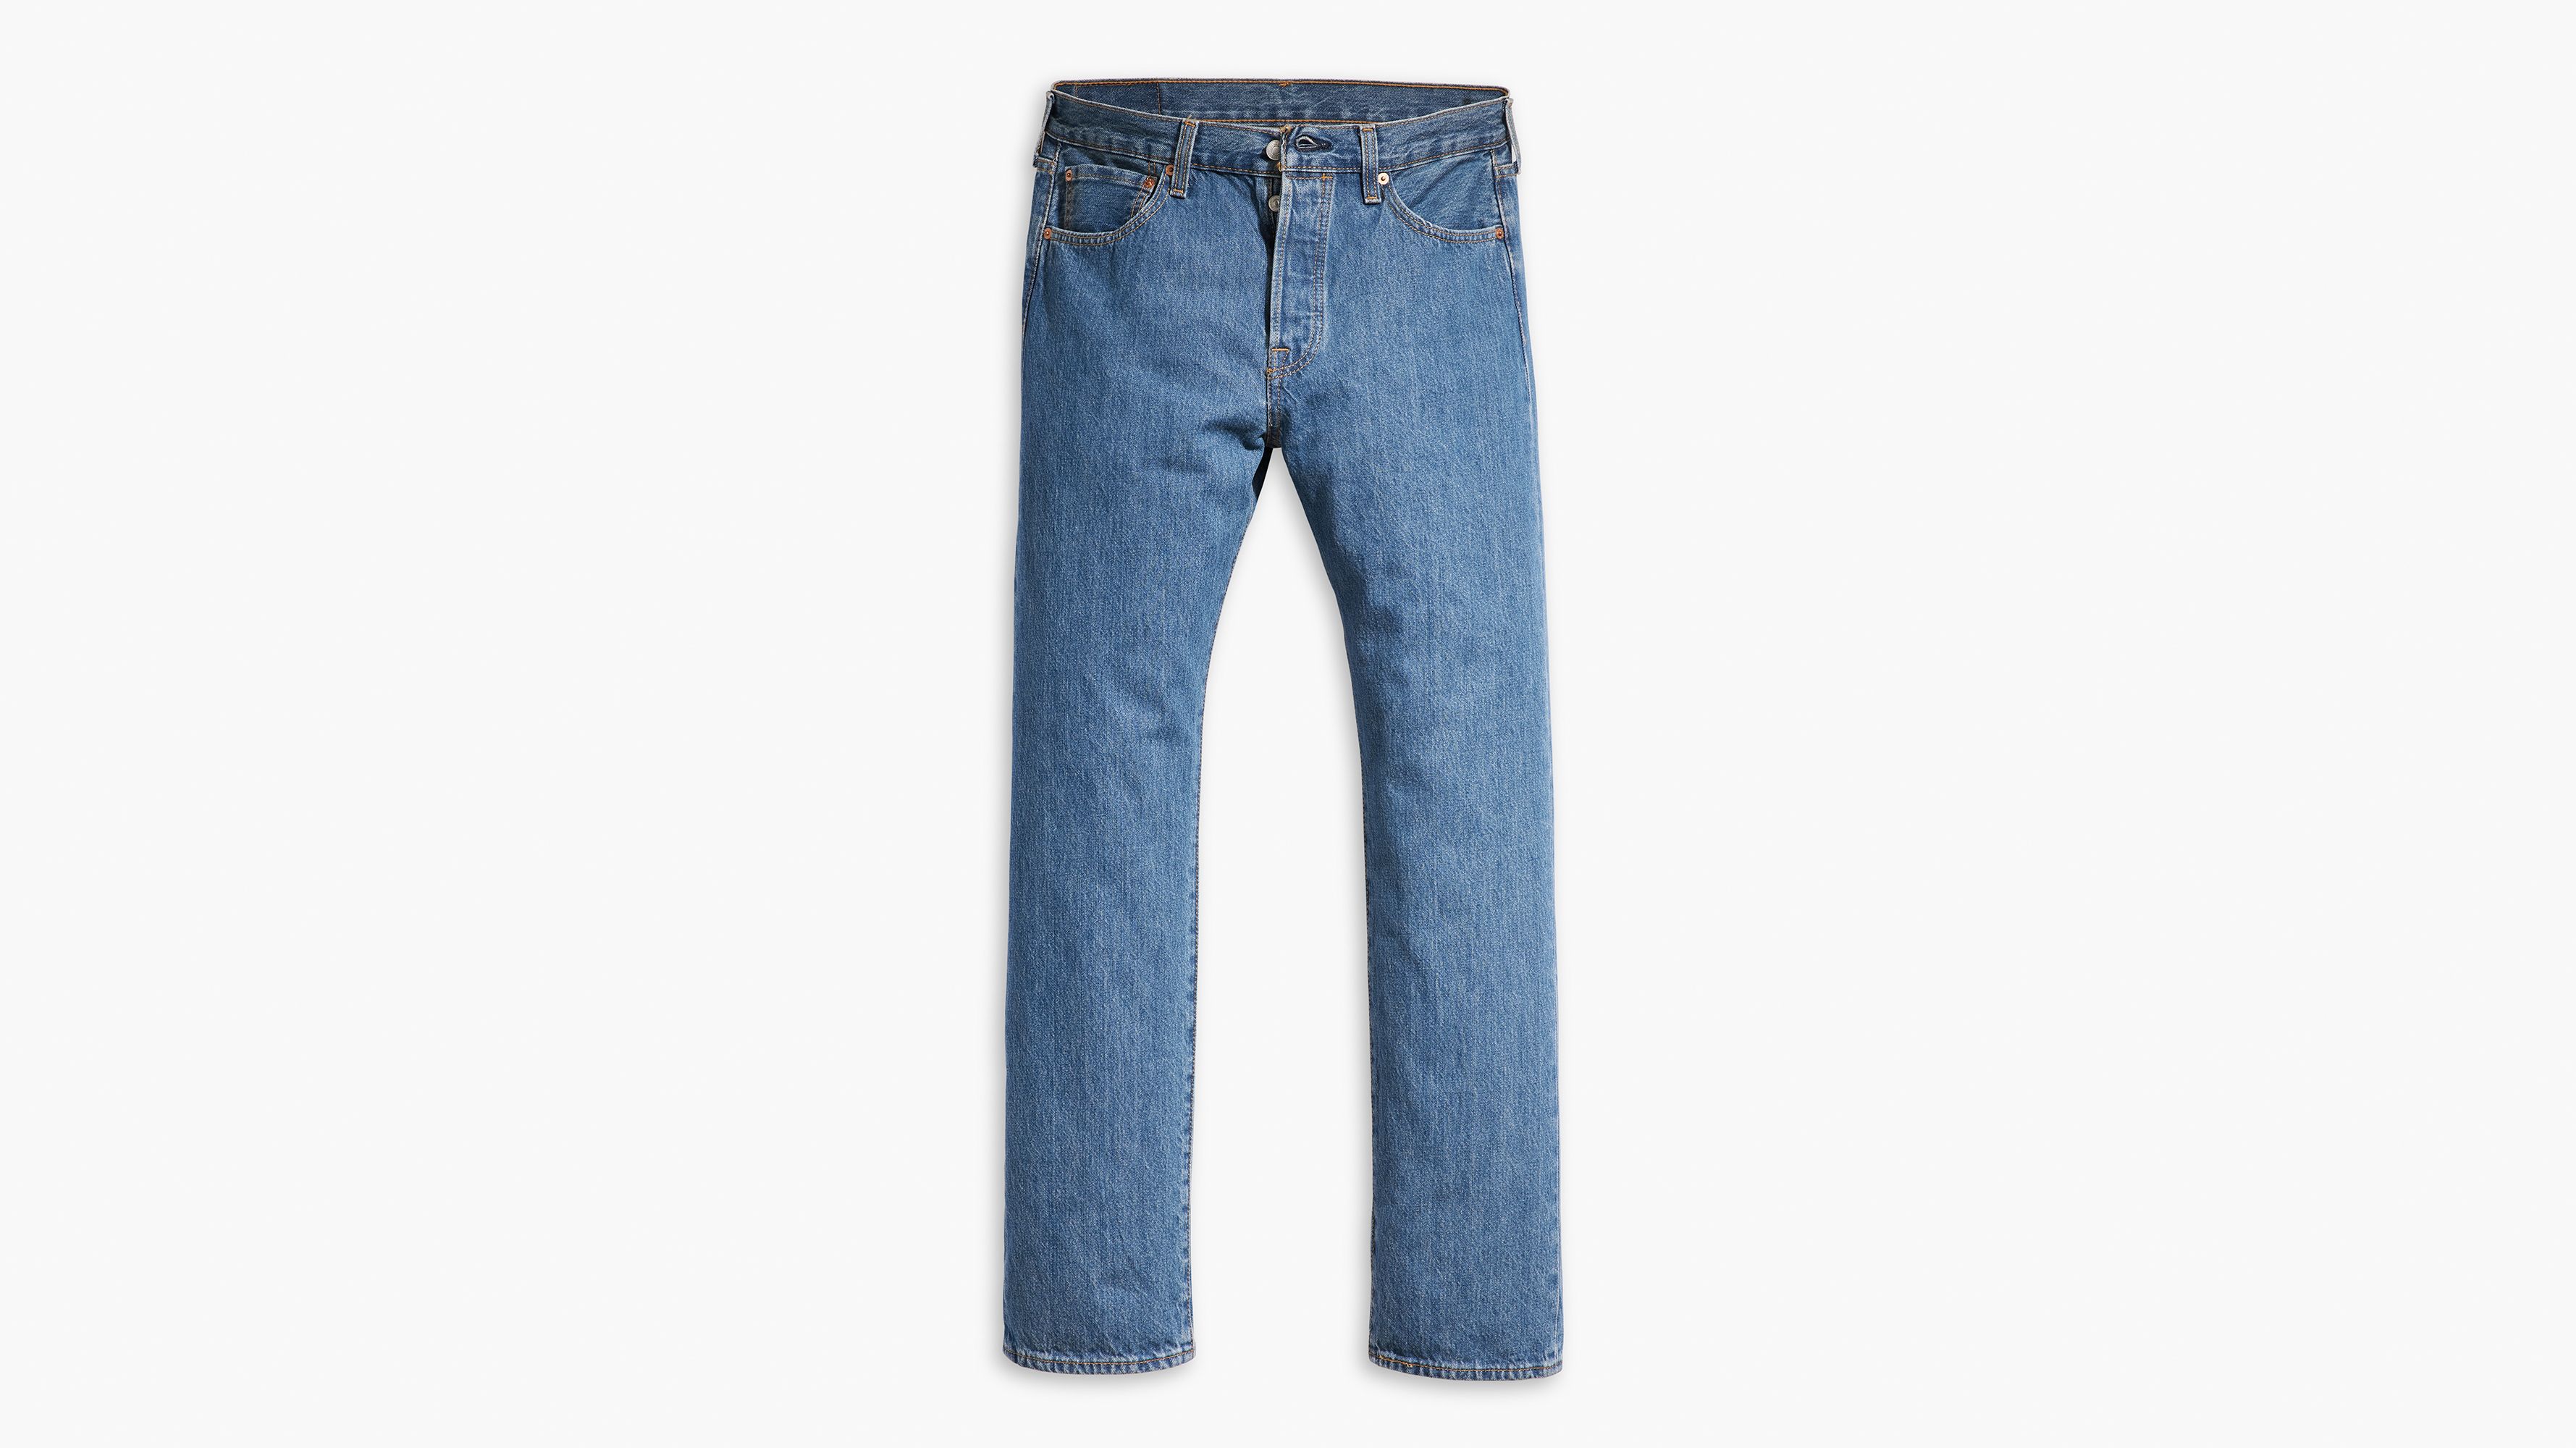 Levi's 501 Original Fit Jeans - Listless - MODA3